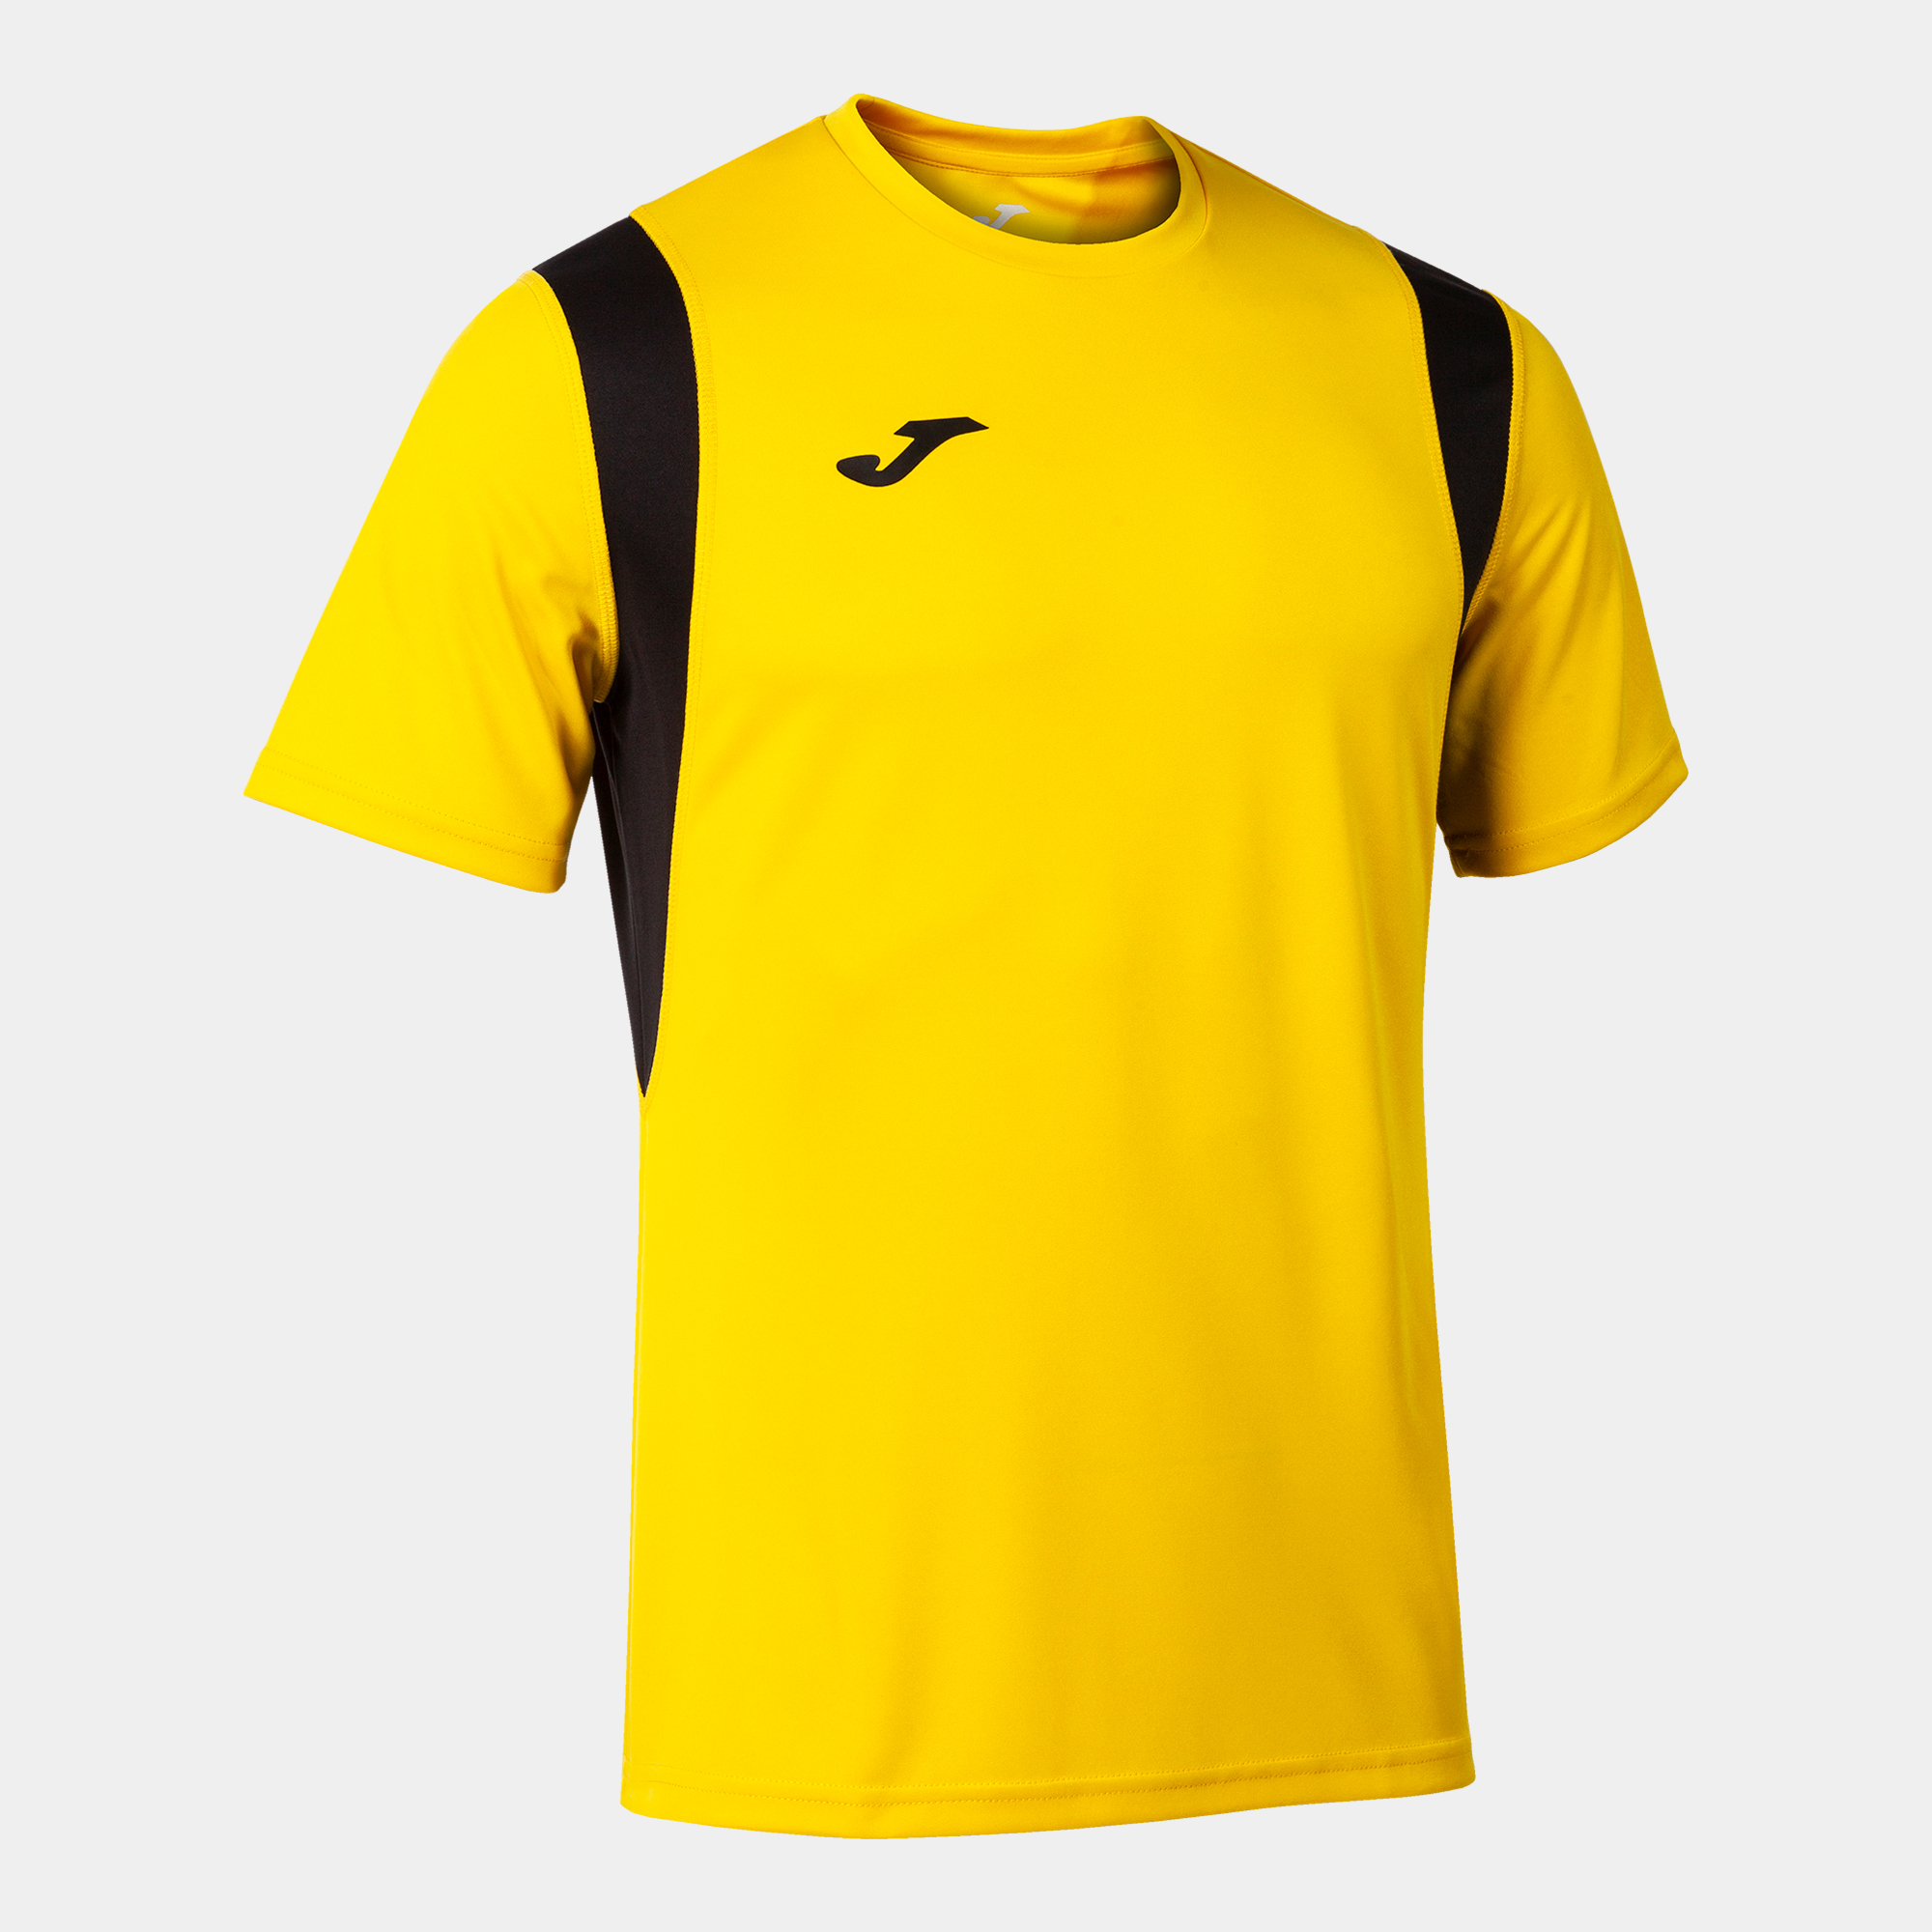 T-shirt Manga Curta Joma Dinamo Amarelo - amarillo - 